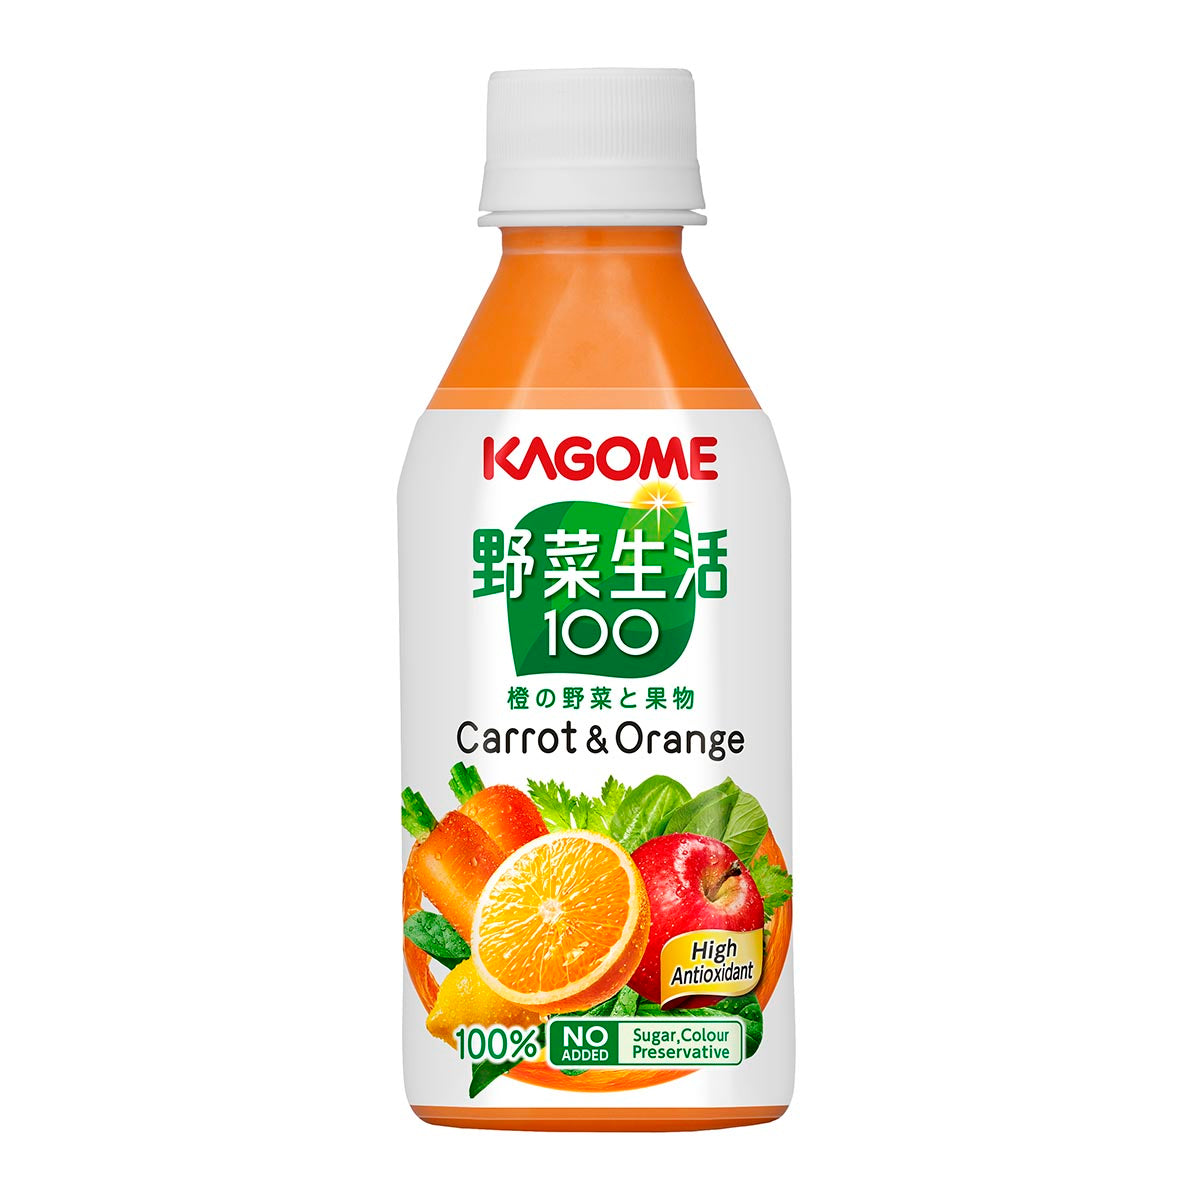 KAGOME 野菜生活100 甘筍混合汁 24 x 280ml